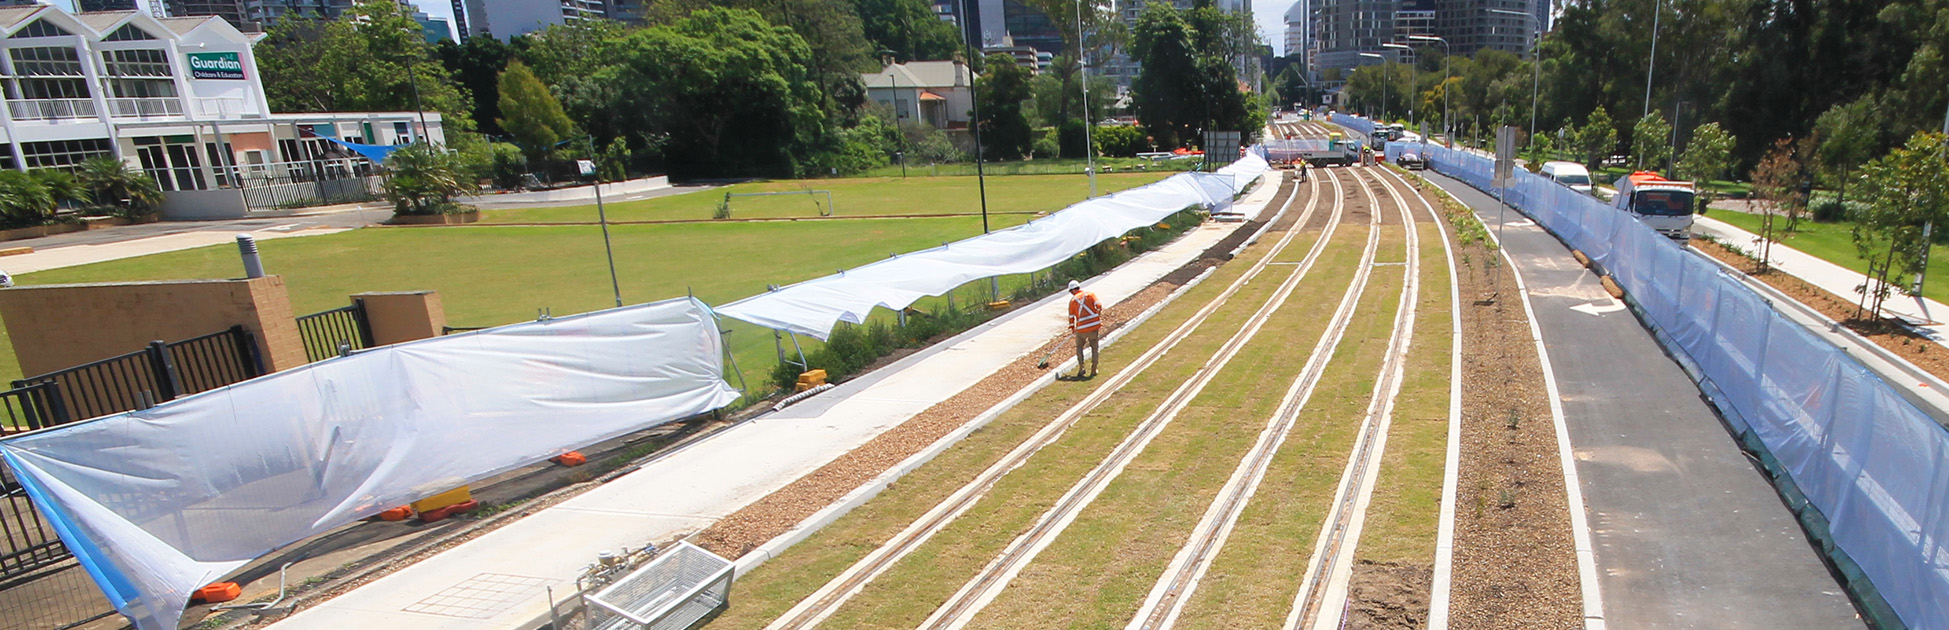 ‘Green’ track laid for Australian light railway thumbnail